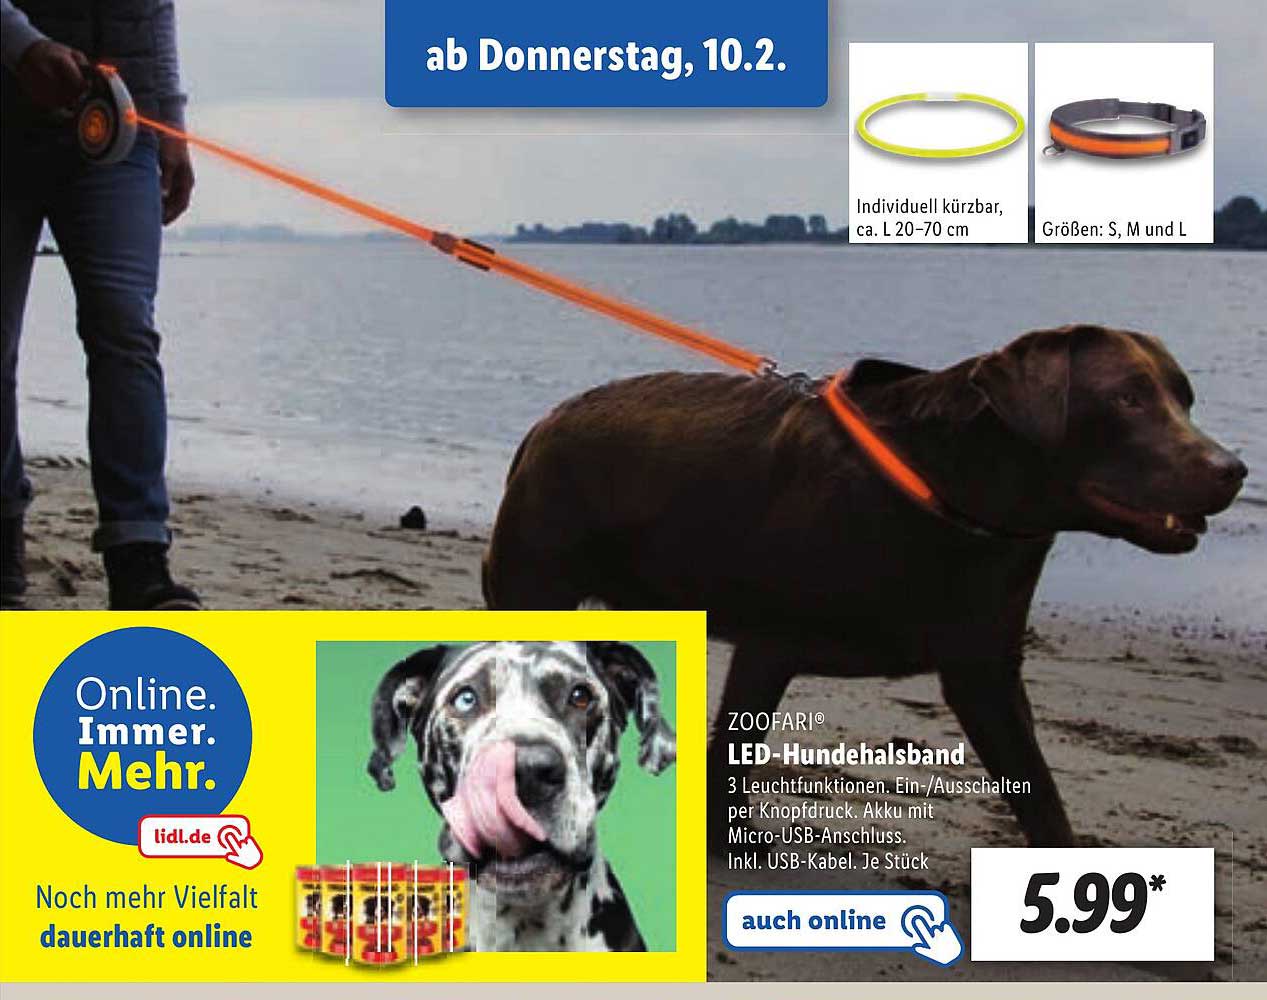 Zoofari Led-Hundehalsband Angebot bei Lidl